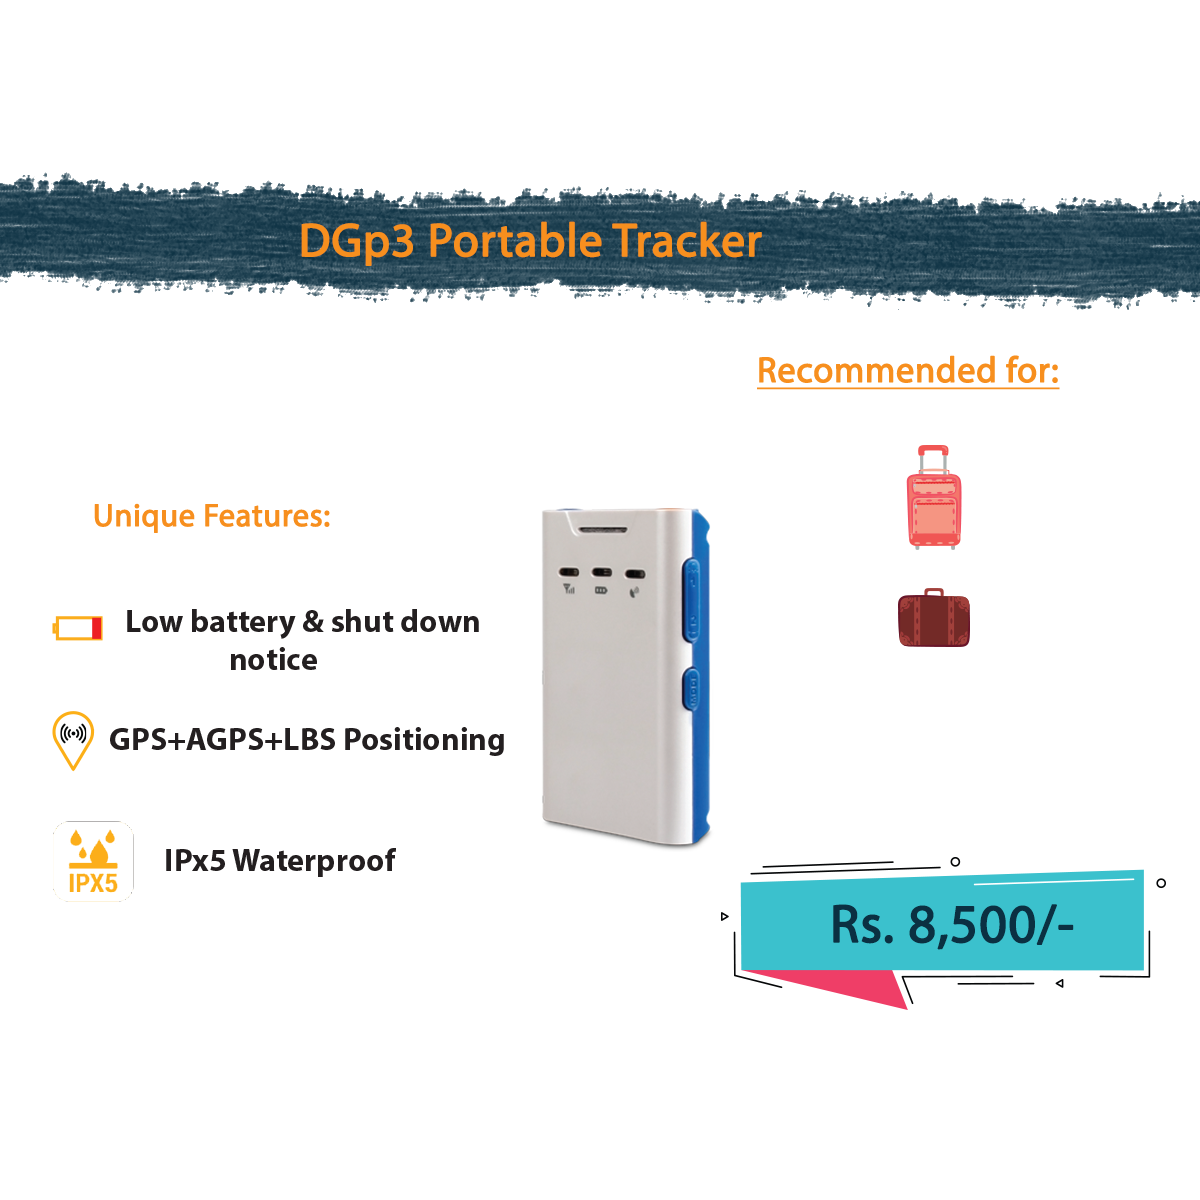 DGp3 - Portable Tracker